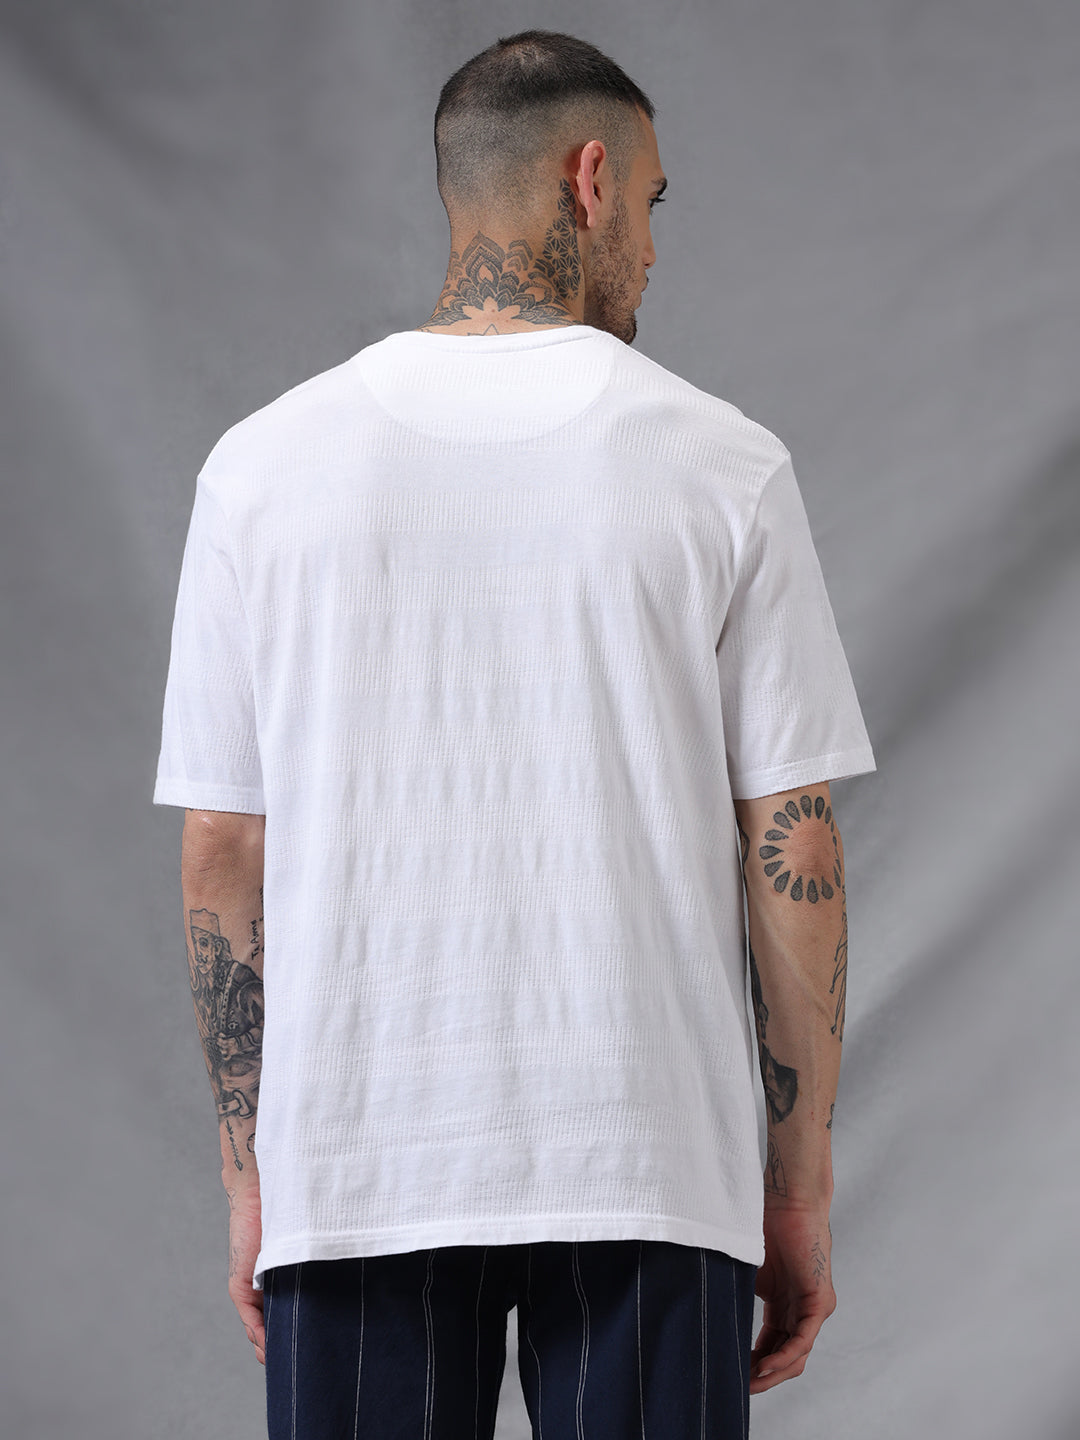 Textured White Crew Neck T-Shirt